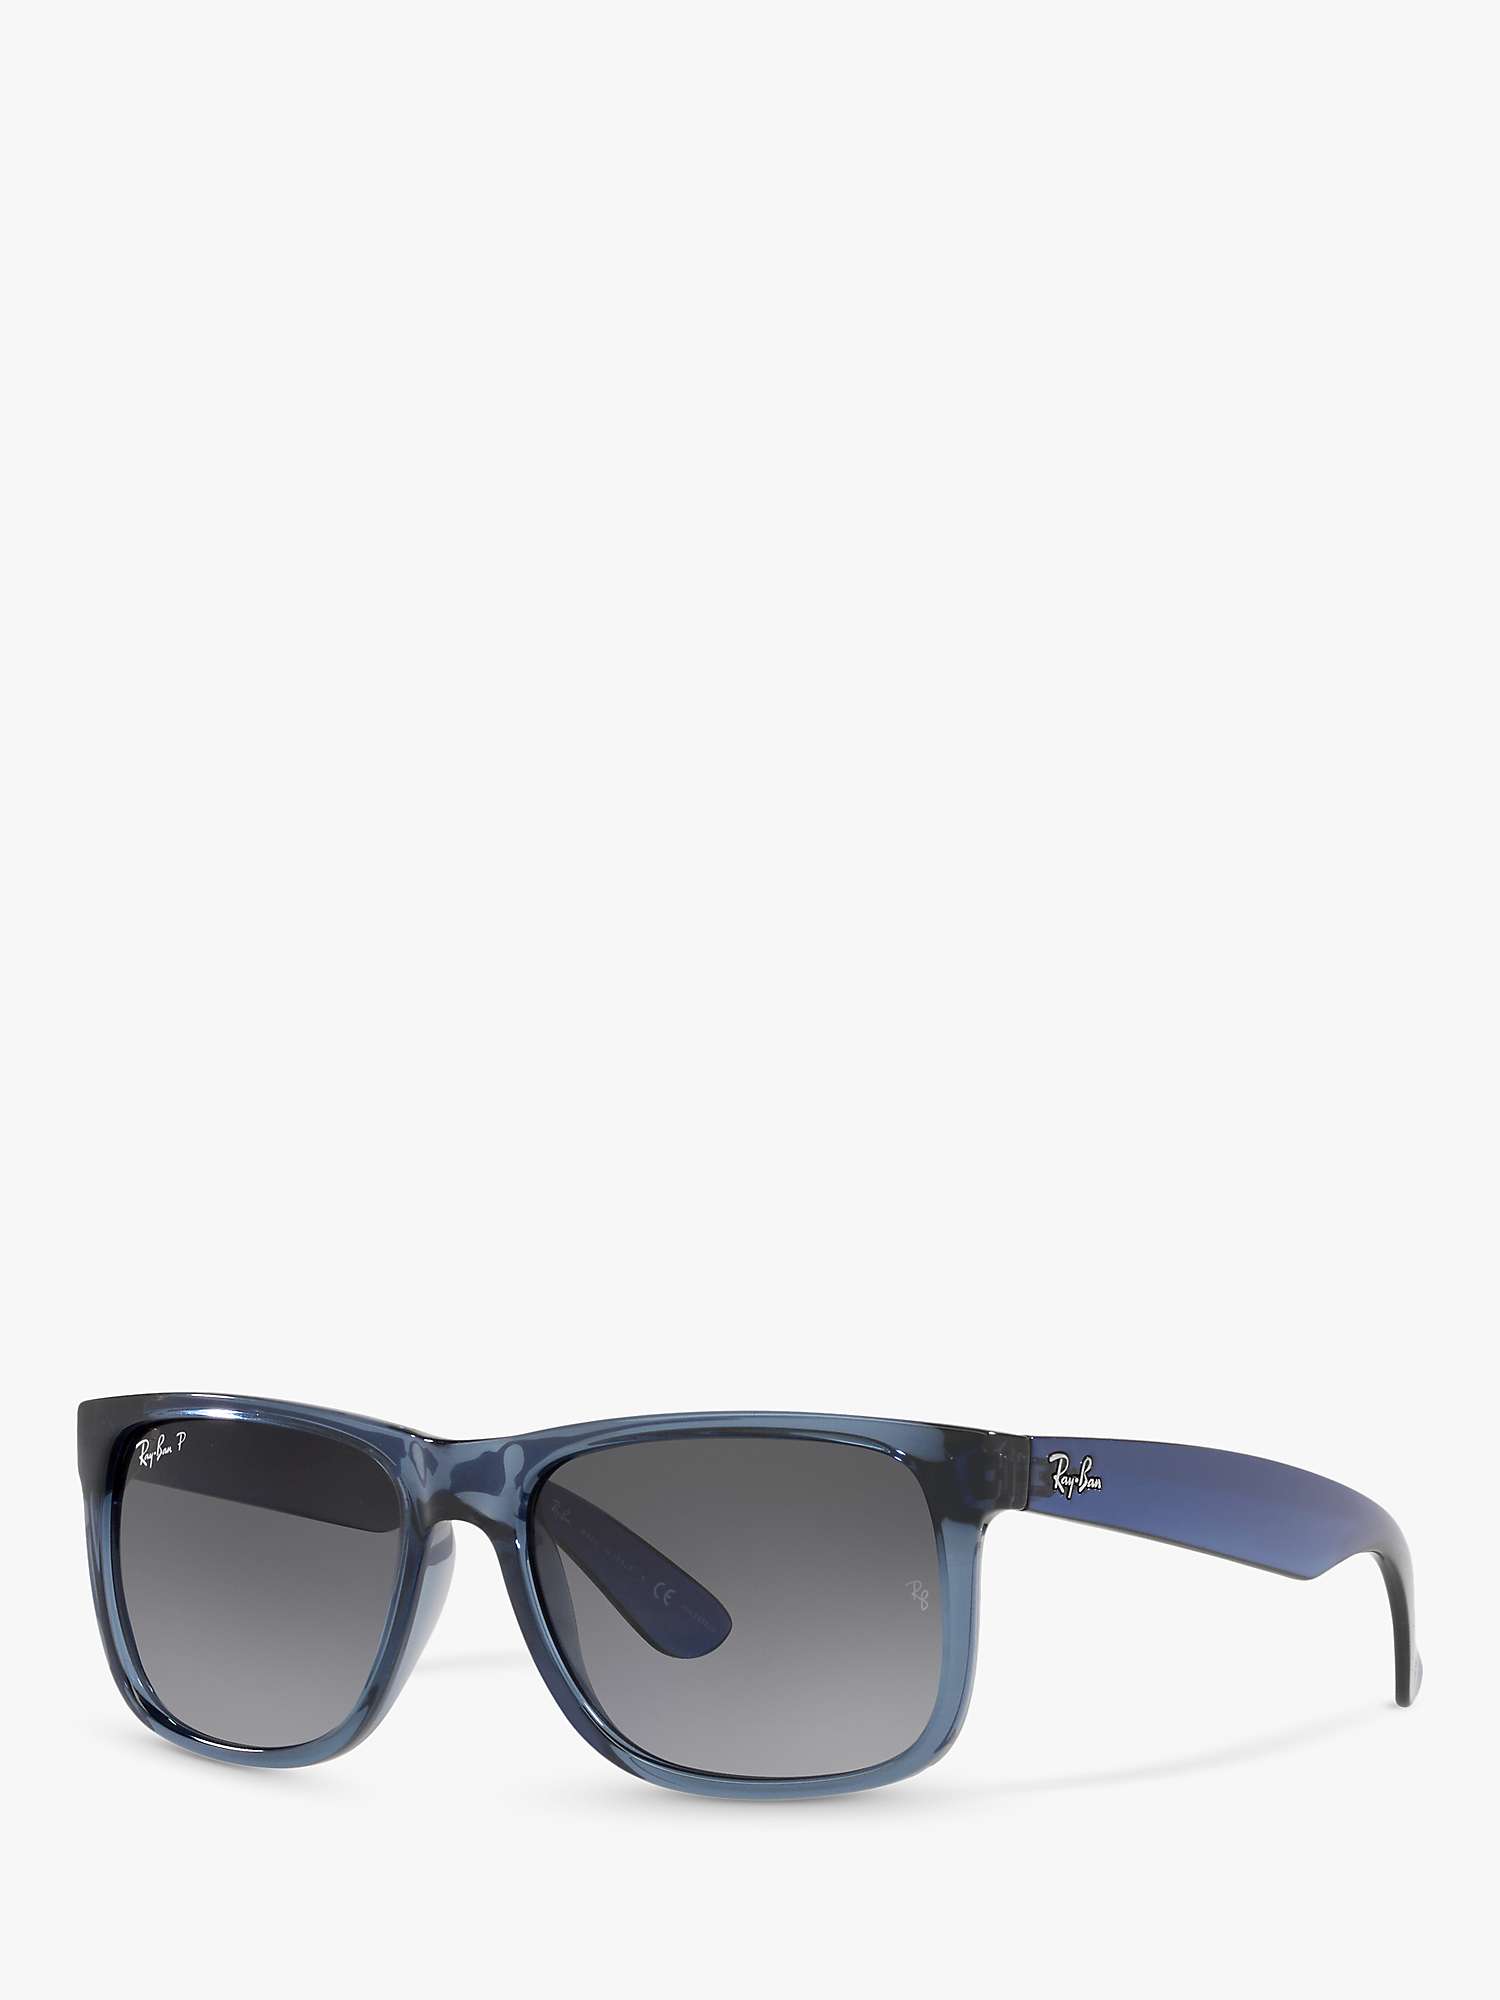 Buy Ray-Ban RB4165 Men's Polarised Justin Square Sunglasses, Transparent Blue/Grey Gradient Online at johnlewis.com